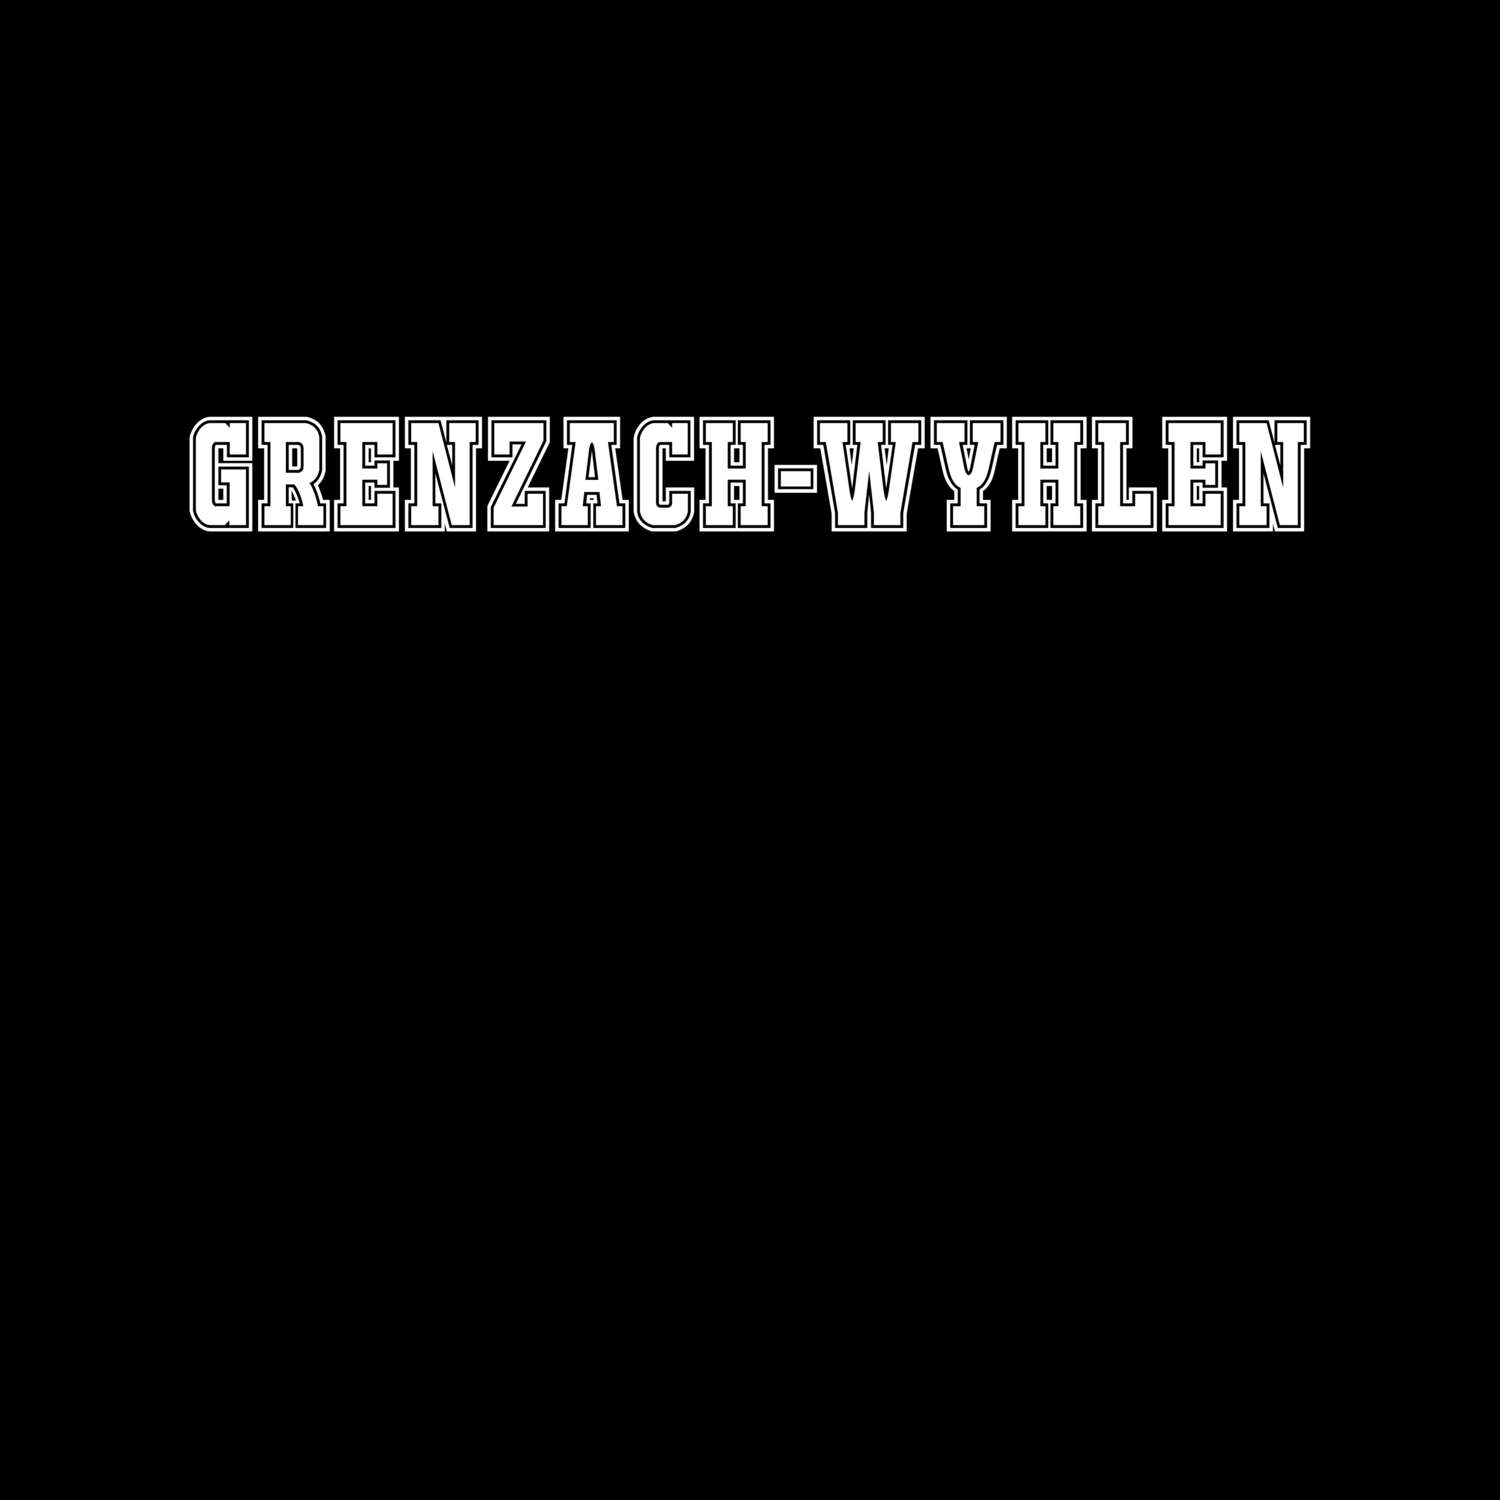 Grenzach-Wyhlen T-Shirt »Classic«